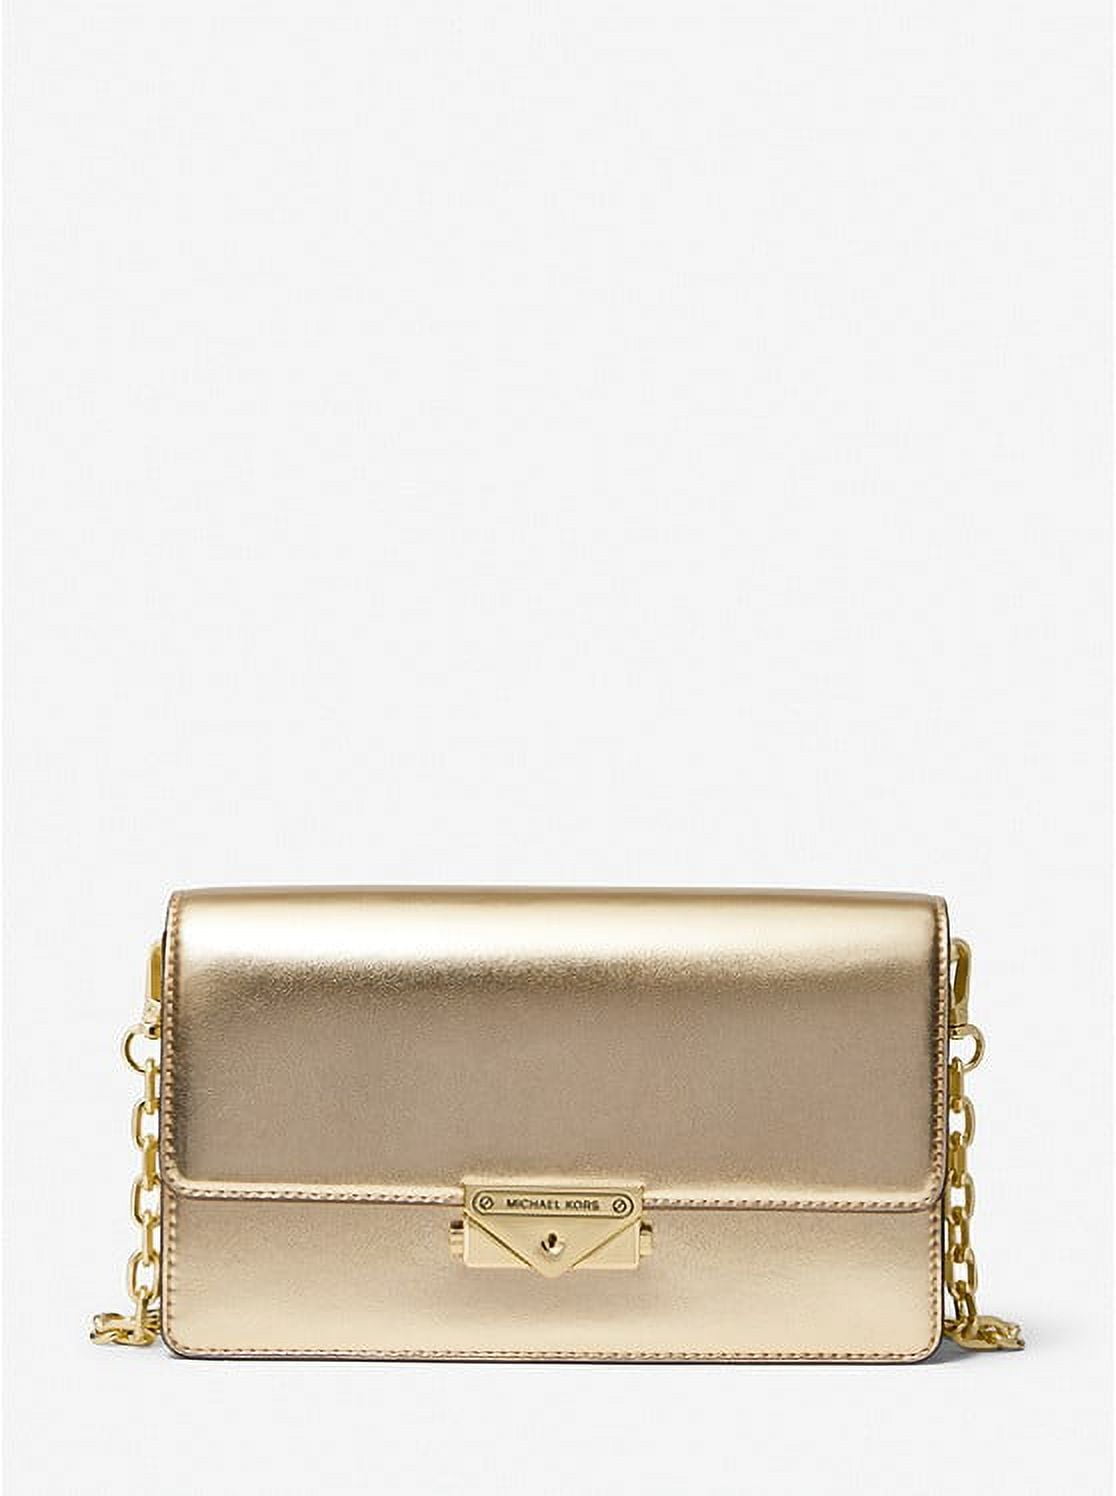 Michael Kors Cece Red Leather Long Gold Chain Clutch Handbag